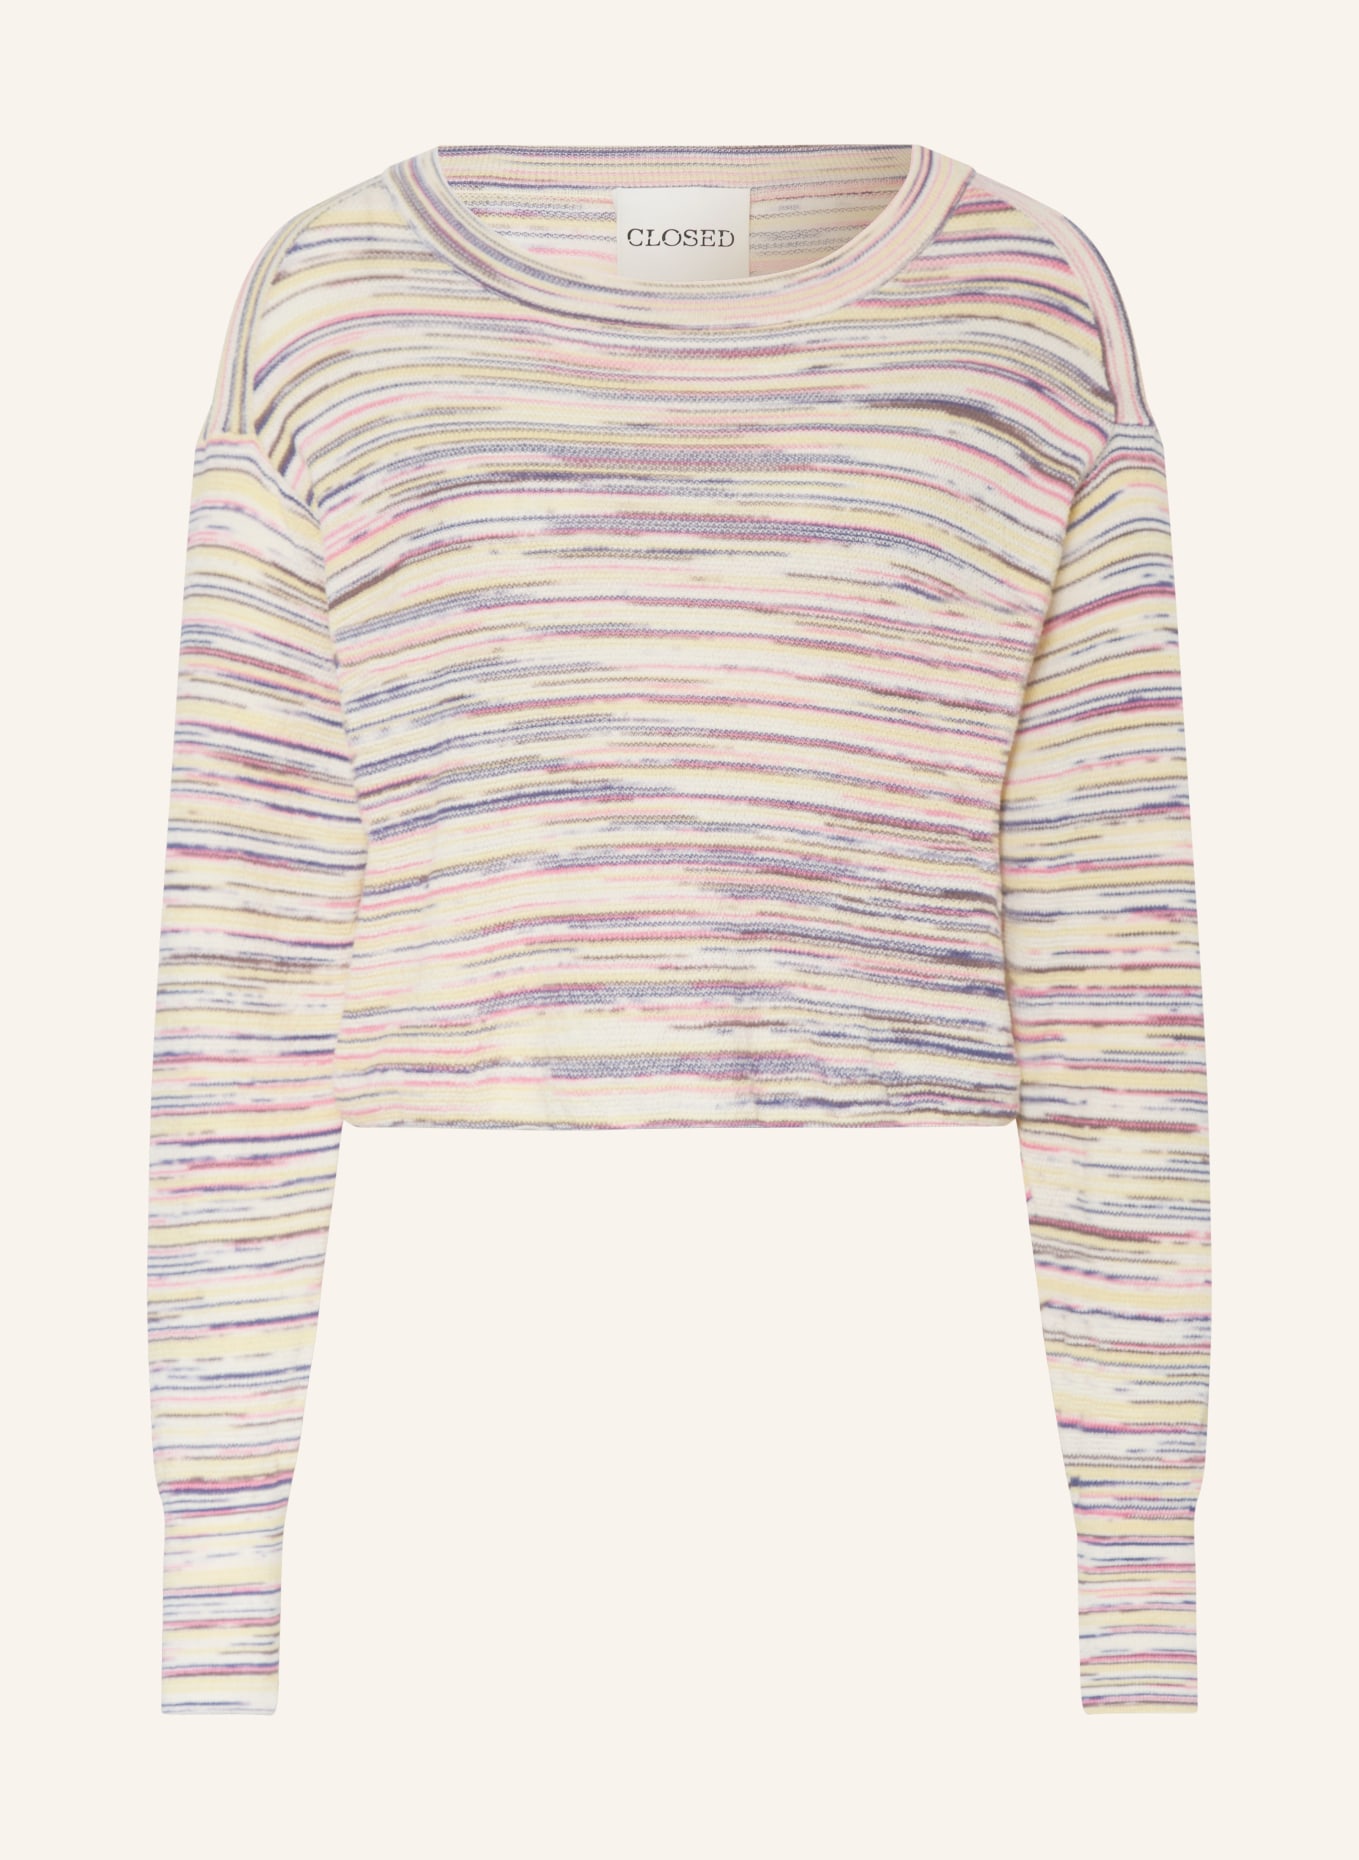 CLOSED Pullover, Farbe: PINK/ BLAU/ HELLGELB (Bild 1)